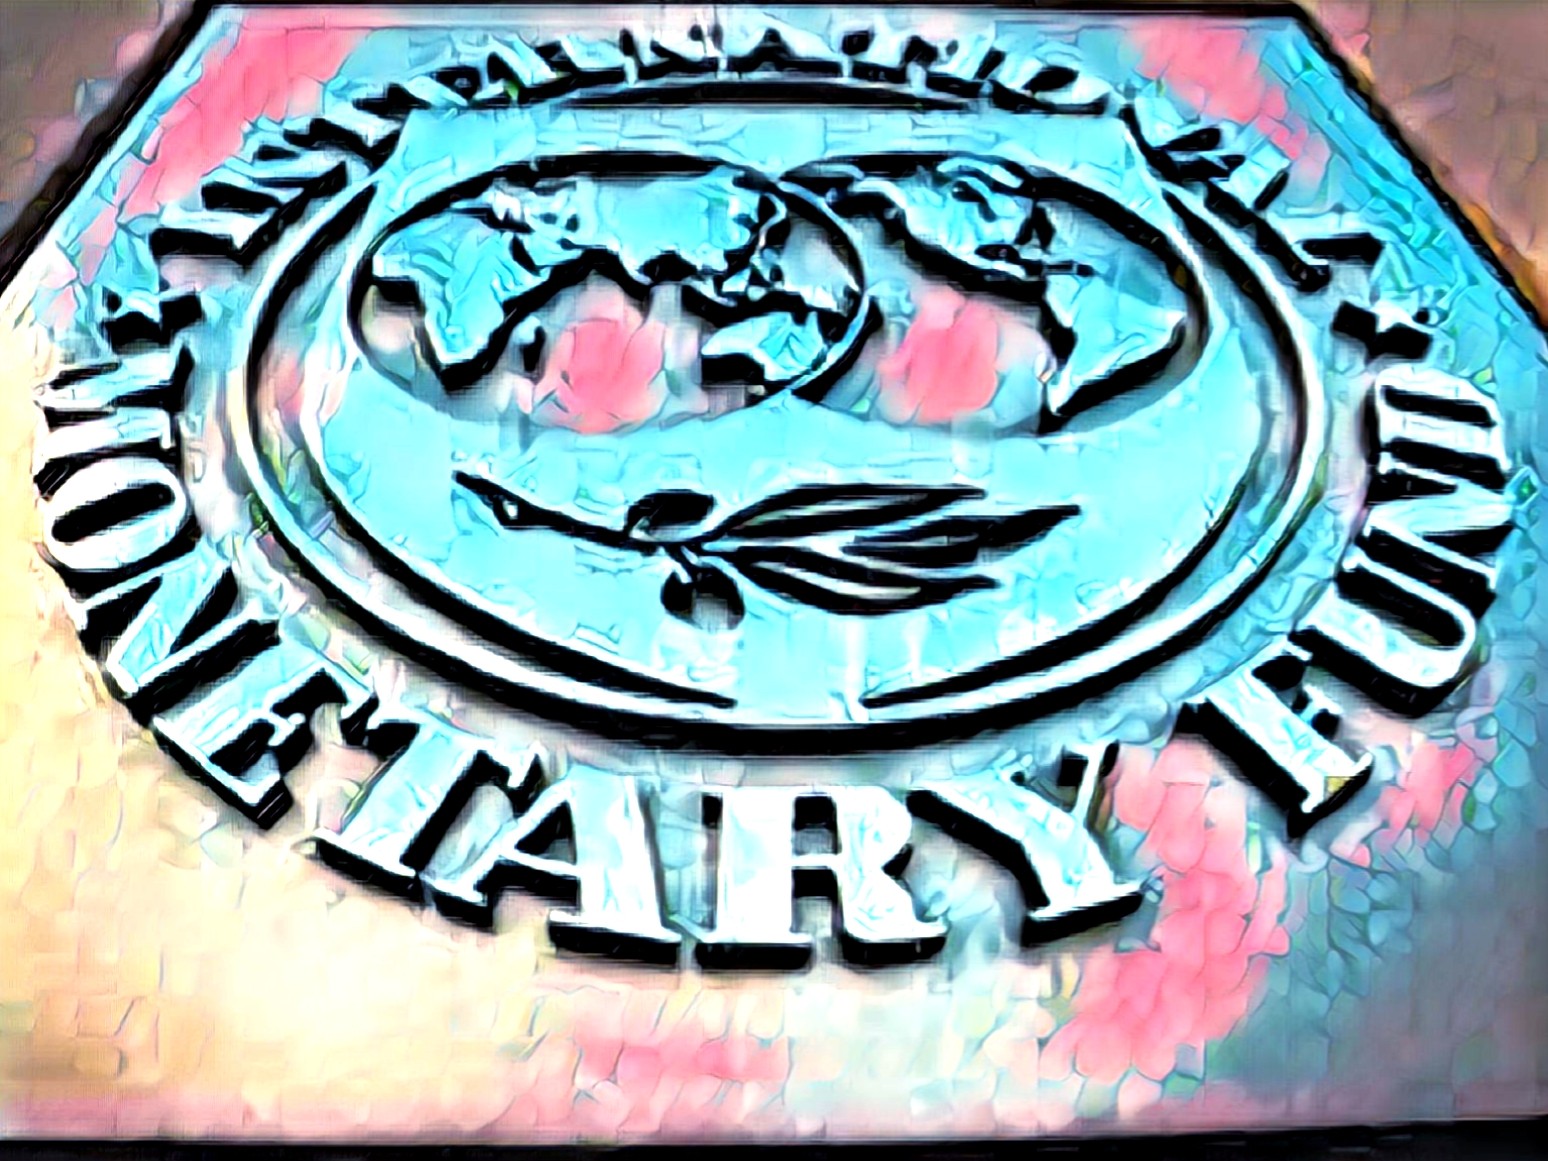 IMF World Bank Learning Coin